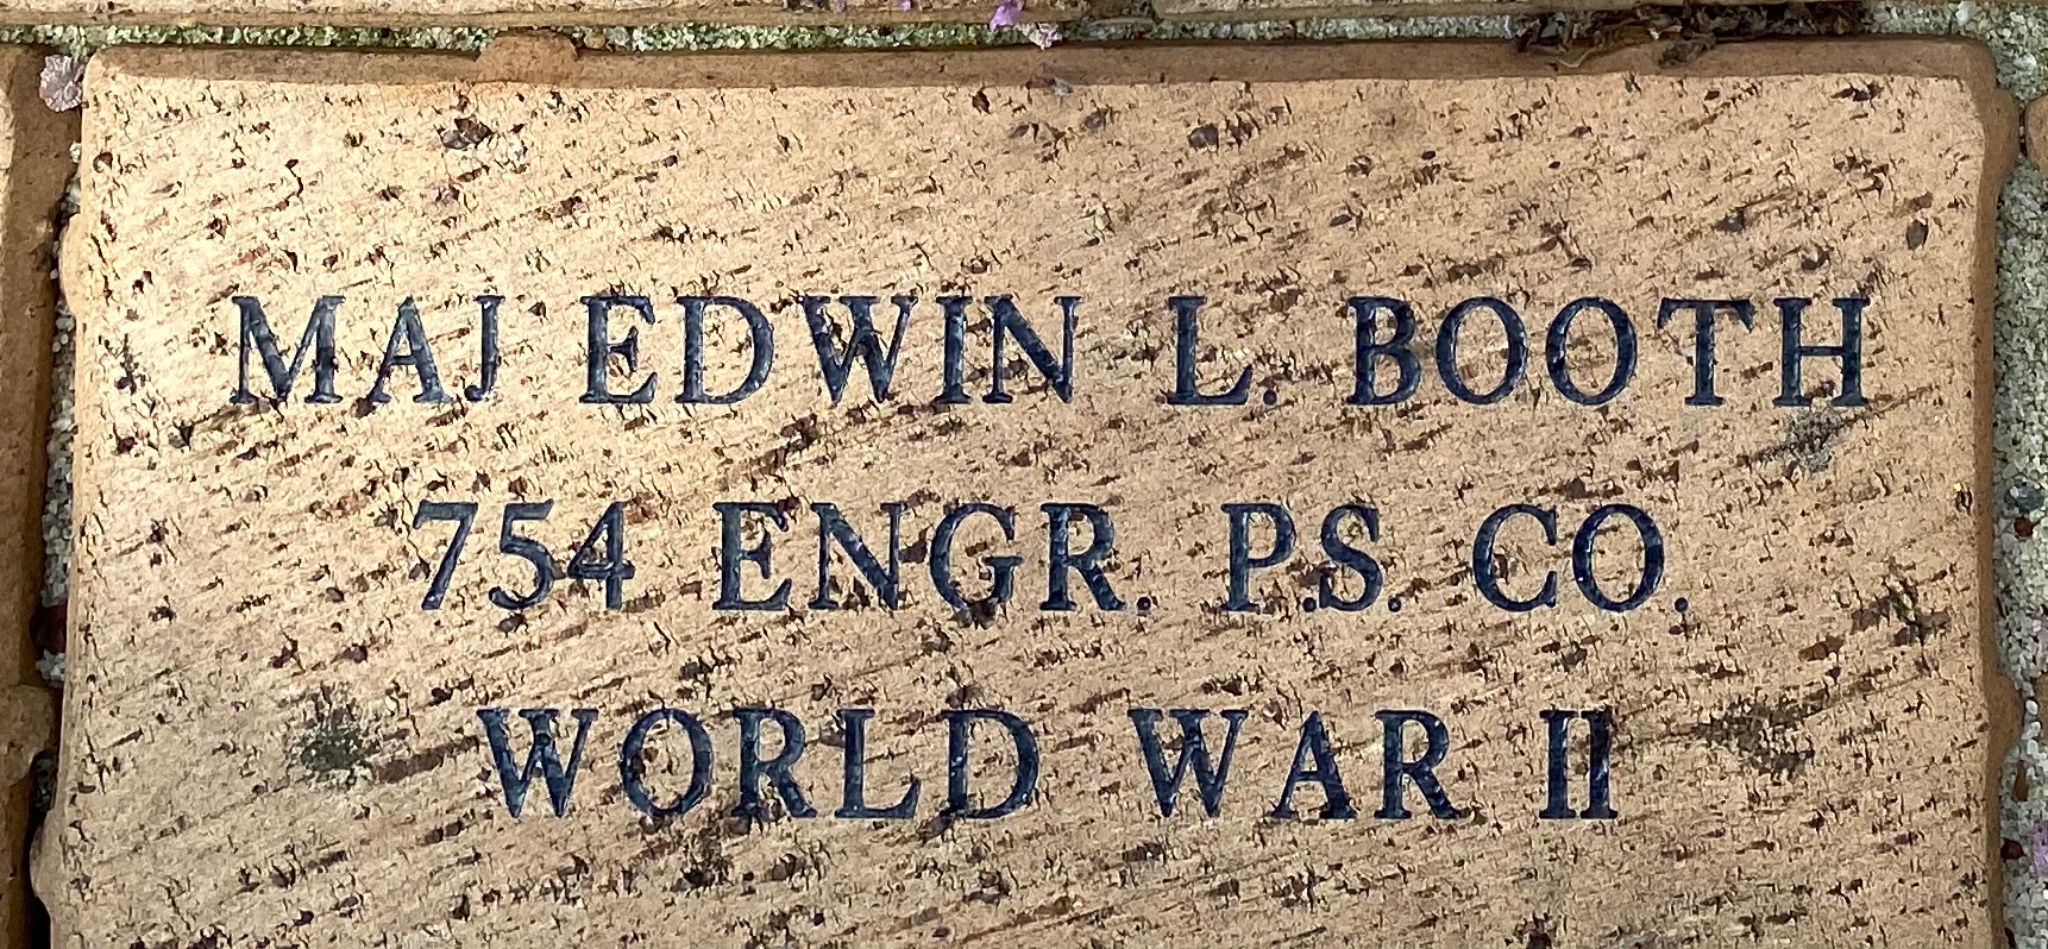 MAJ EDWIN L. BOOTH 754 ENGR. P.S.CO WORLD WAR II